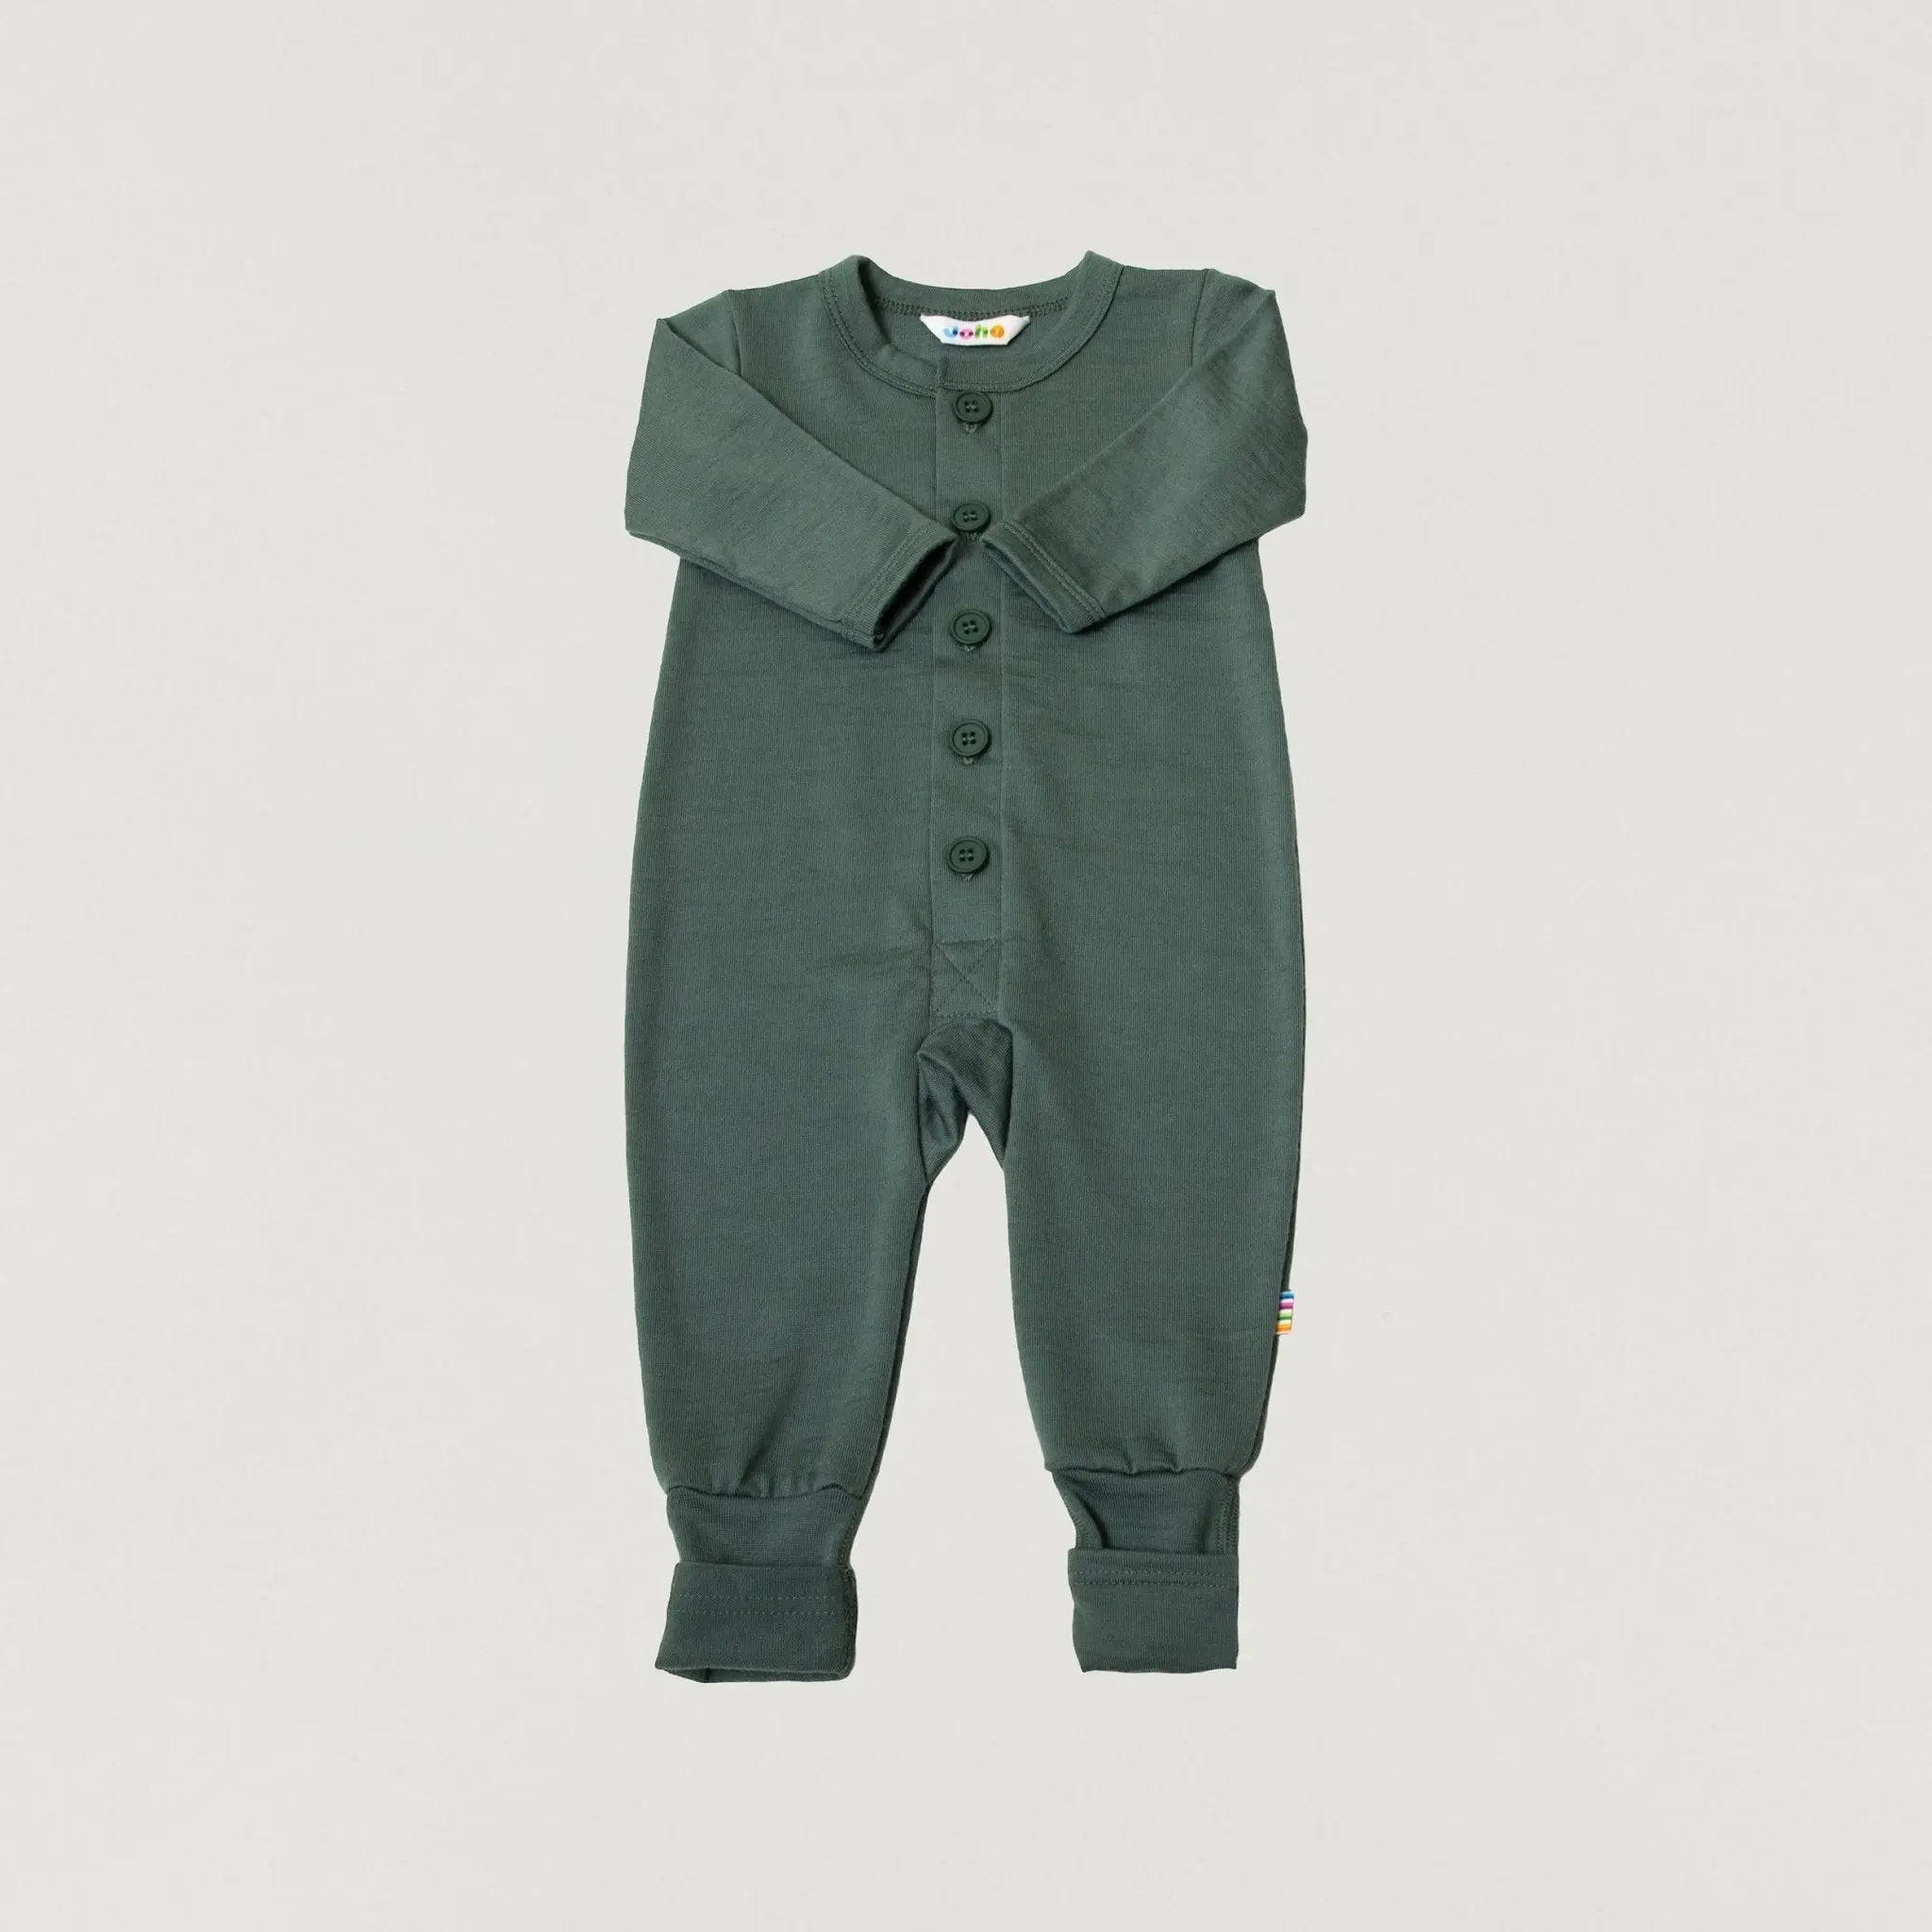 Babybox and Family Joha Pyjama aus Wolle in Herbsttönen 56/62 dark-sage-jh #farbe_56/62